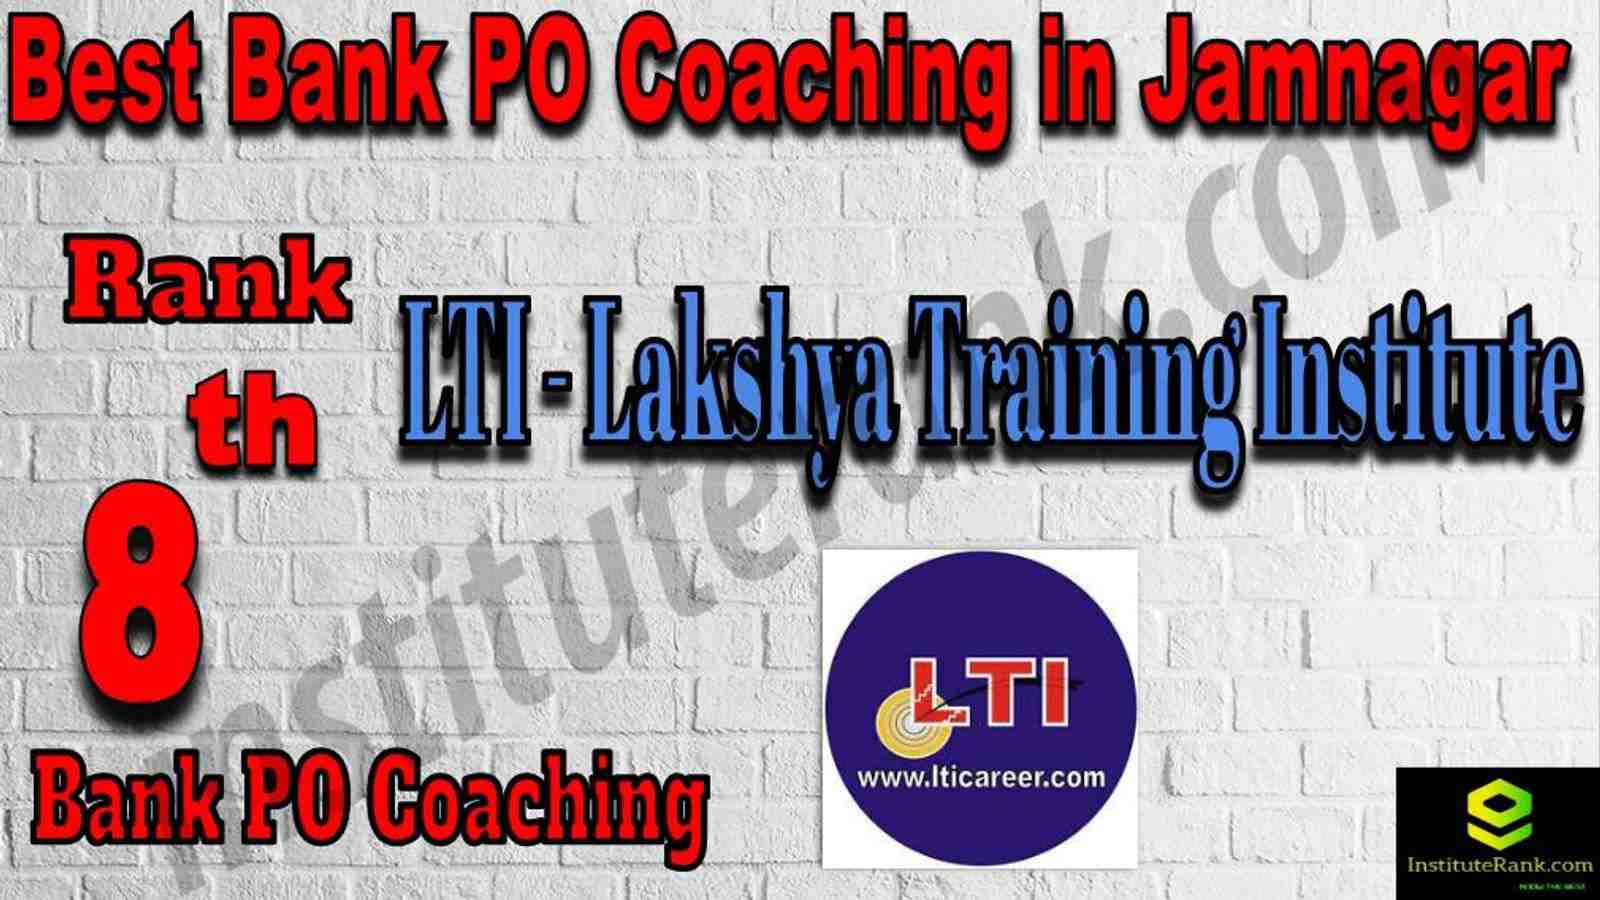 8th Best Bank PO Coaching in Jamnagar